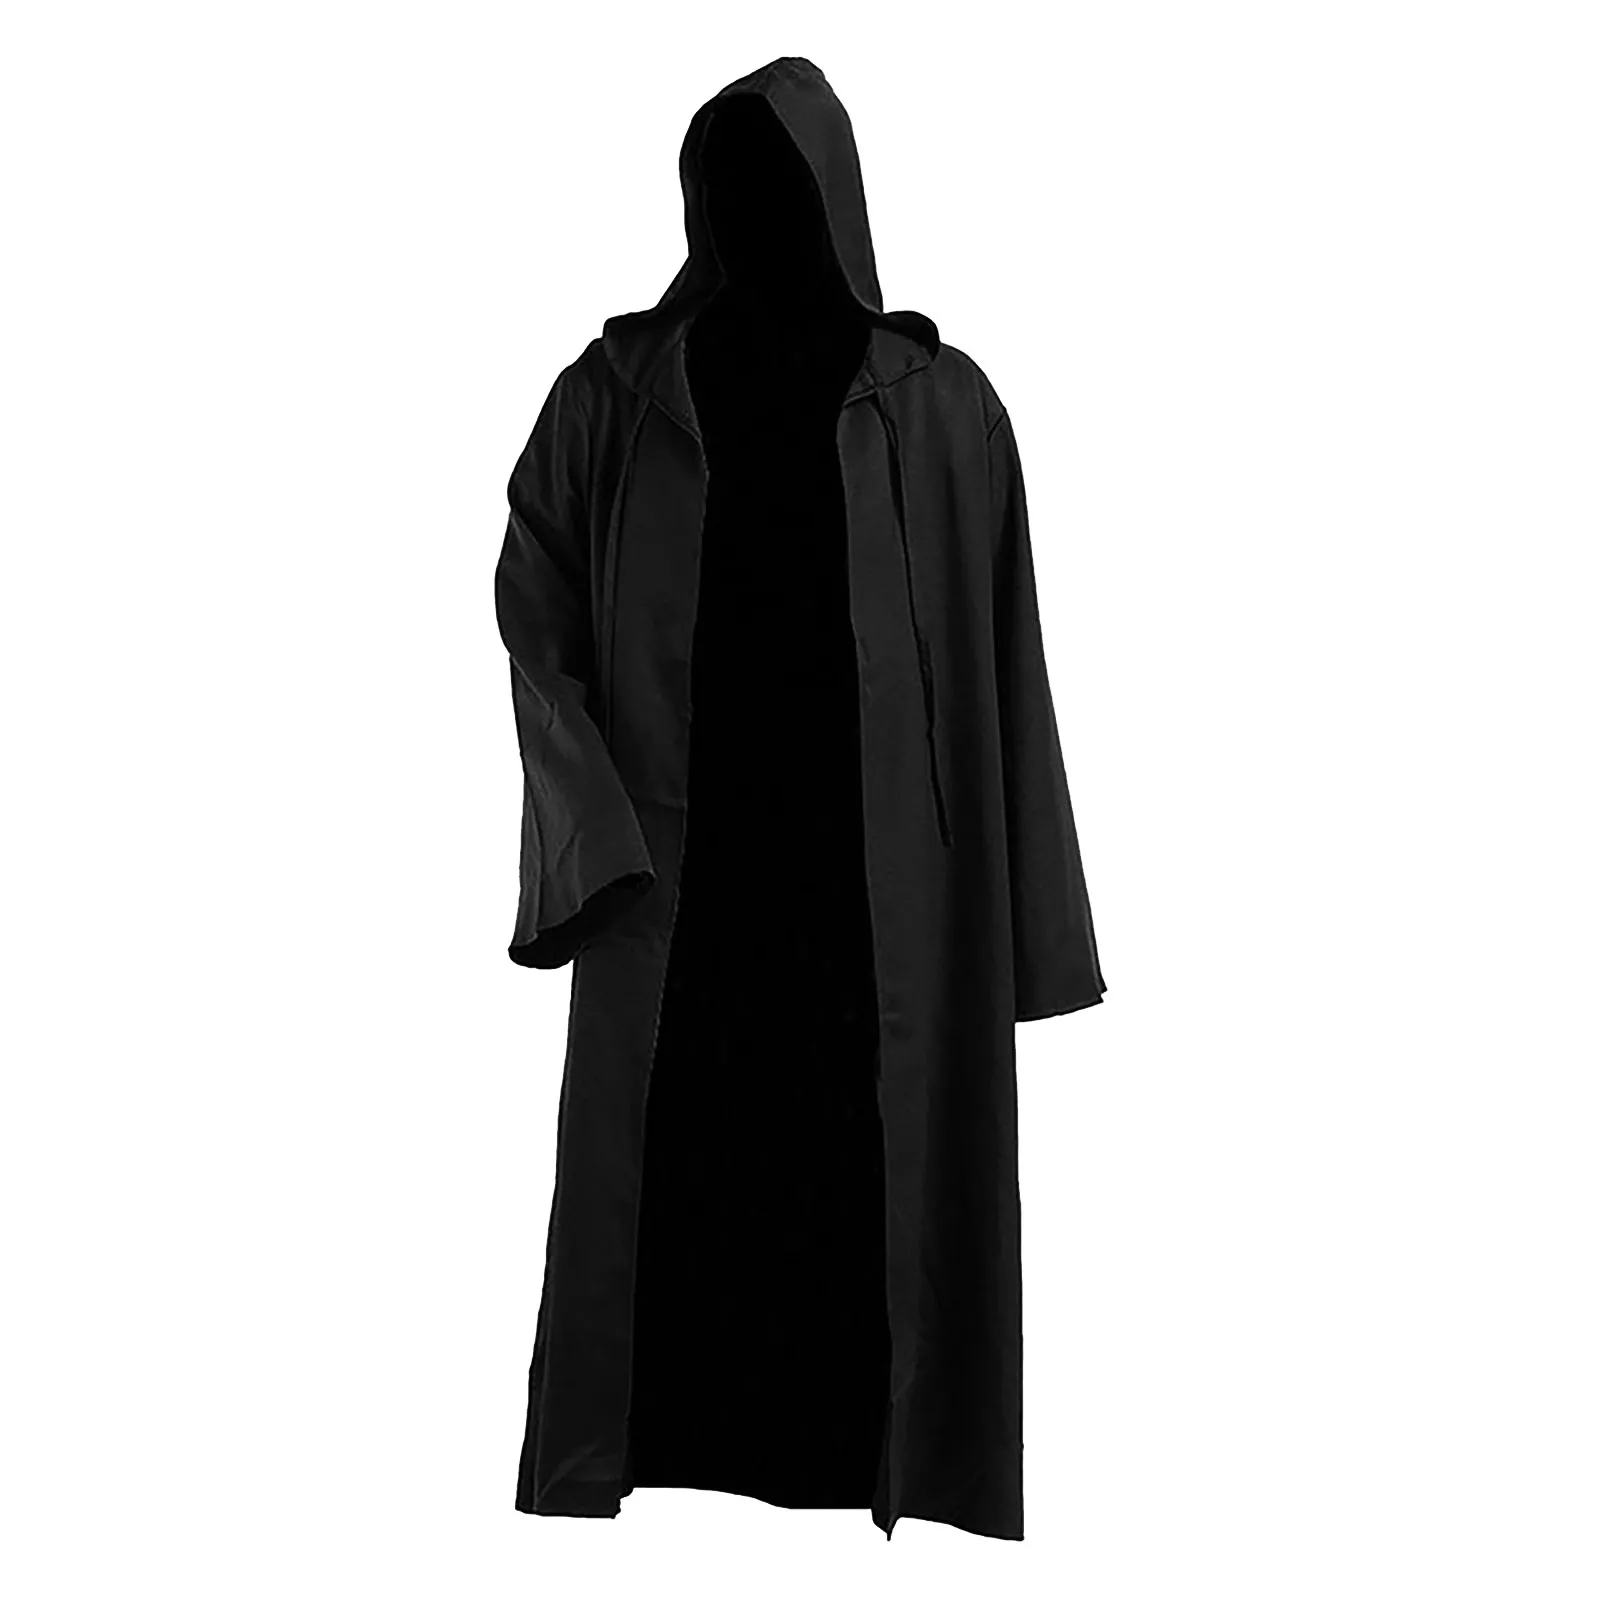 Fashion Halloween Costume Men Solid Colors Long Sleeve Hooded Loose Long Coat Cosplay Vintage Outwear Cardigan Cloak Jacket#g3